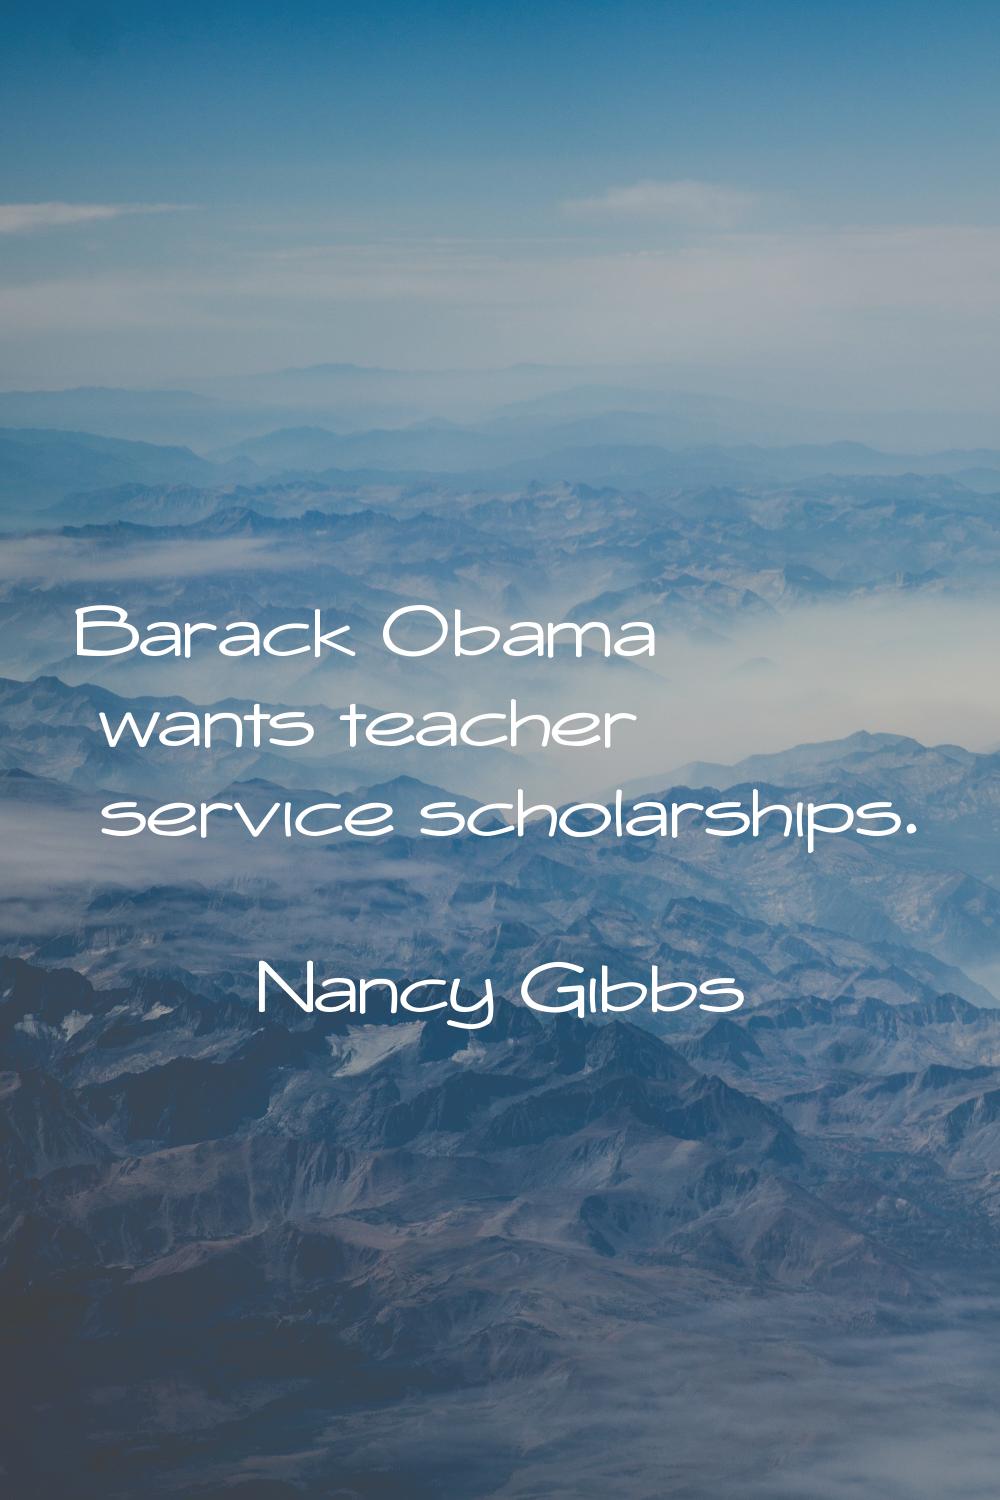 Barack Obama wants teacher service scholarships.